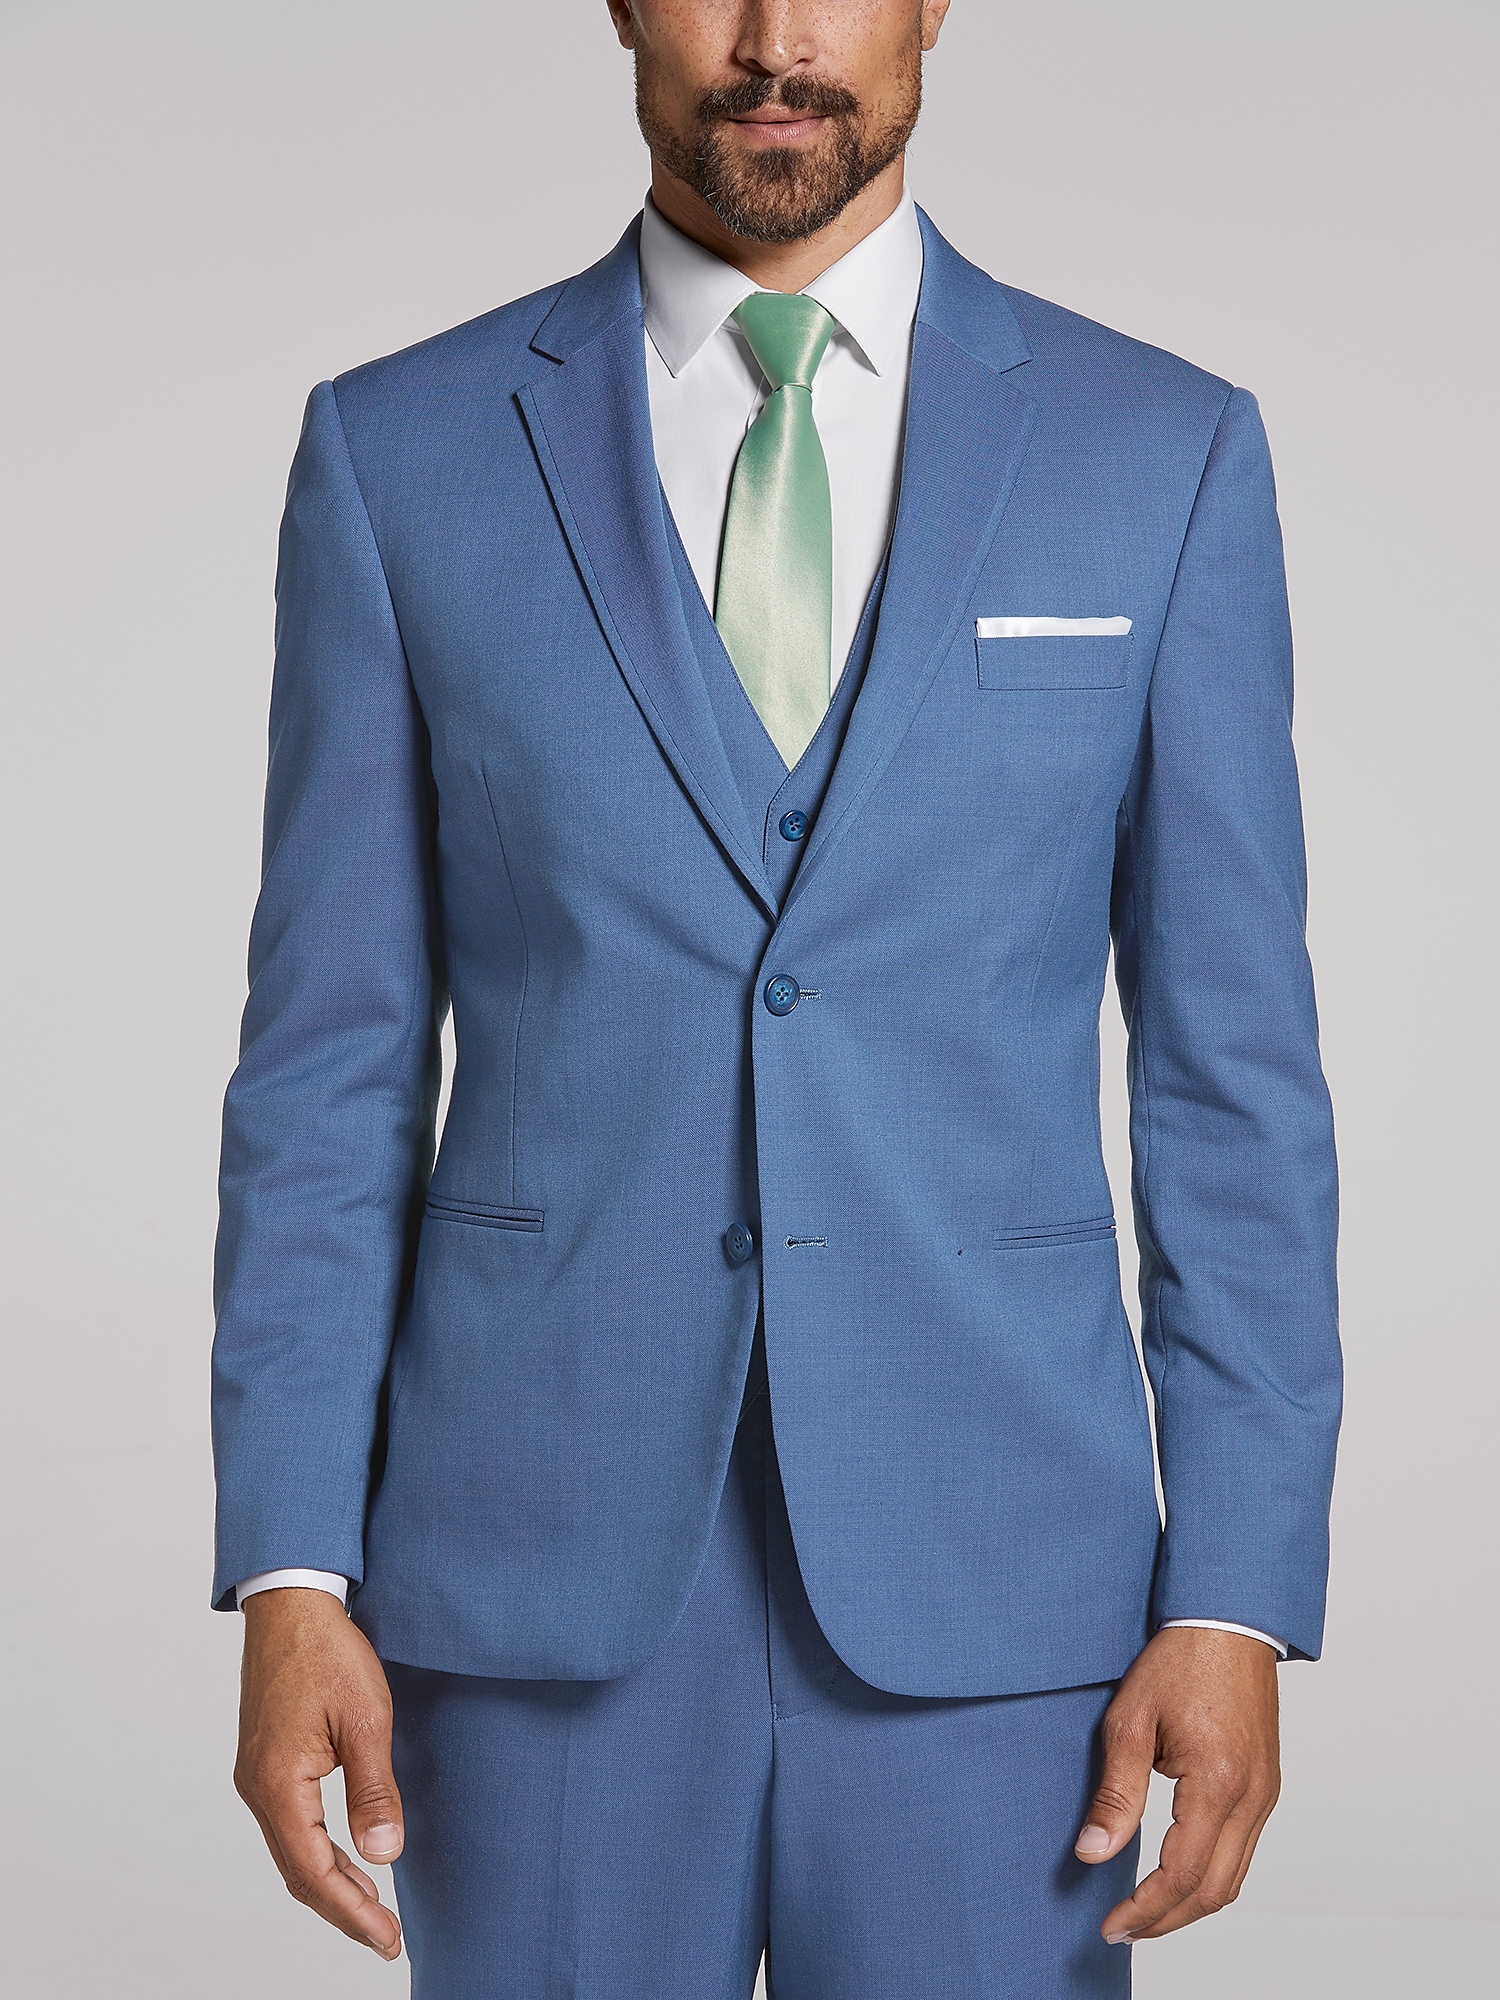 Acercarse Pisoteando Introducir Blue Performance Wedding Suit by Calvin Klein | Suit Rental